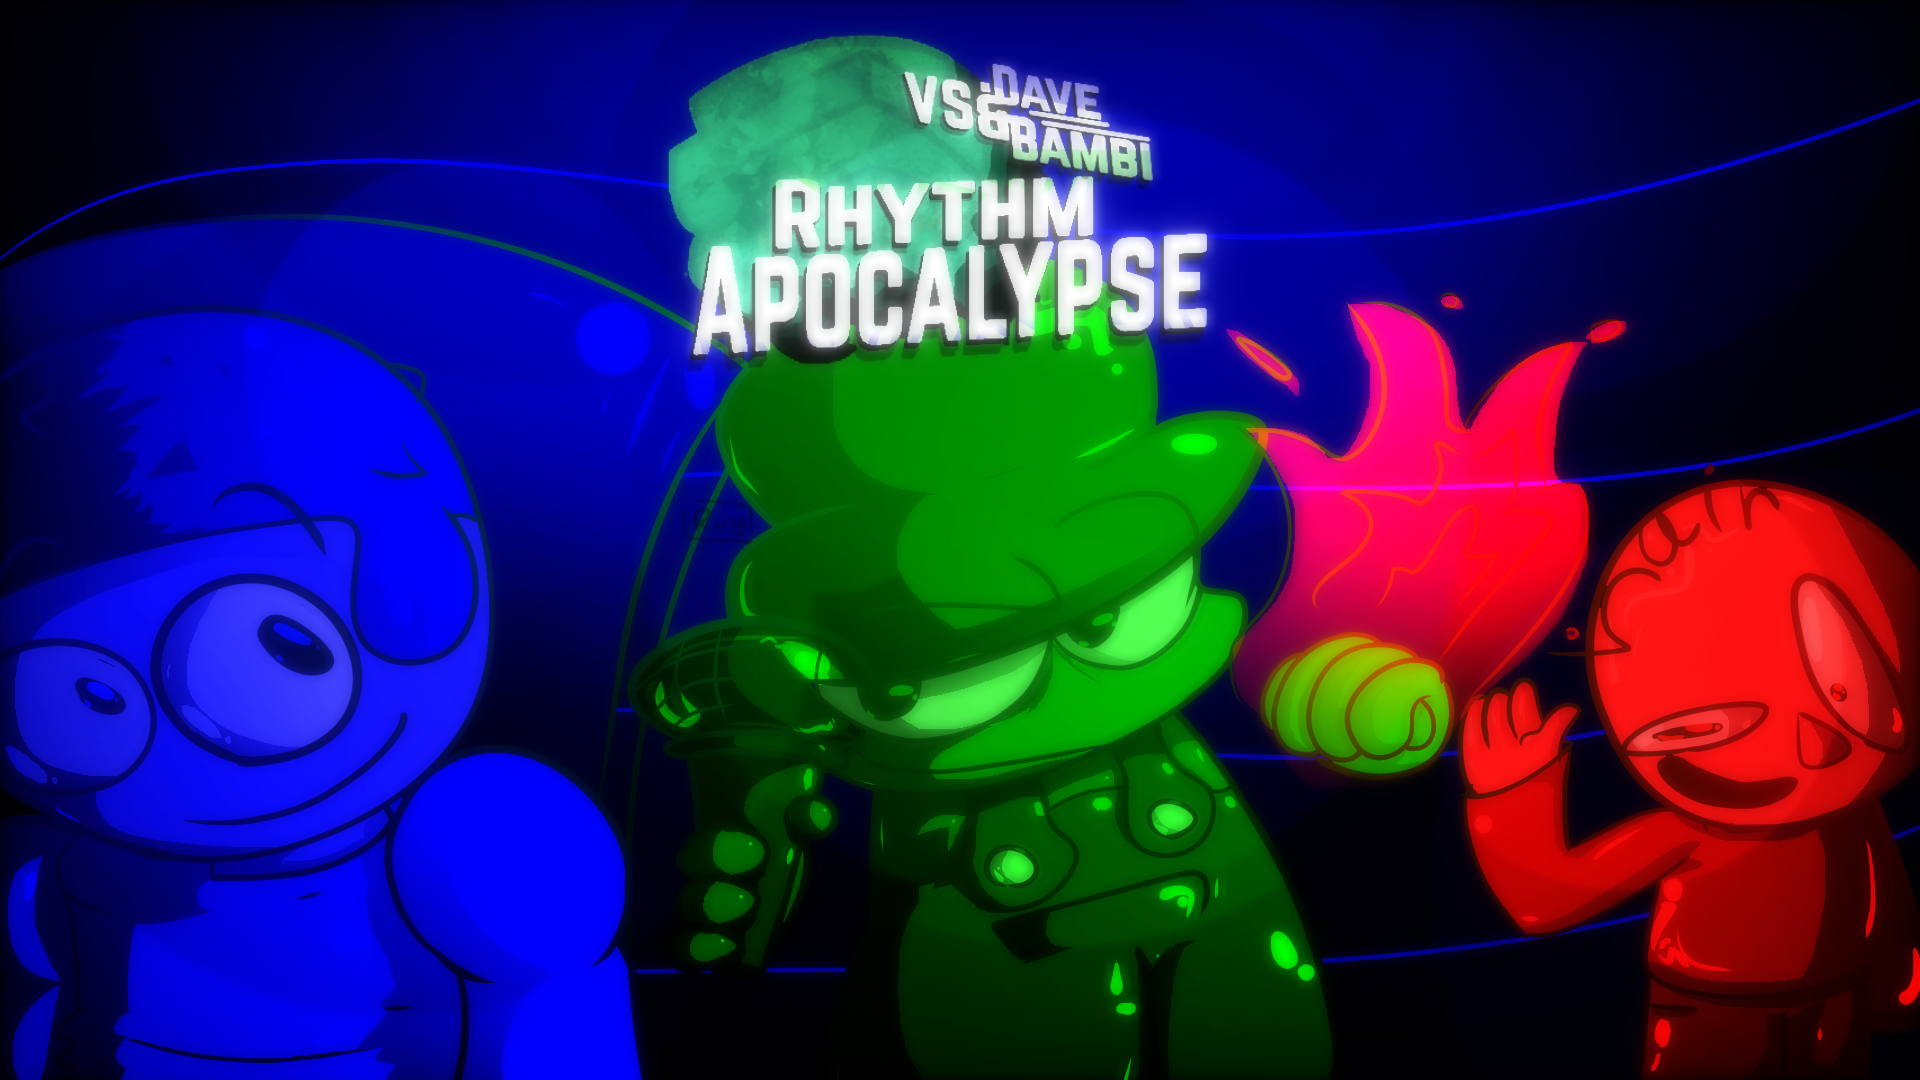 VS Dave & Bambi: Rhythm Apocalypse